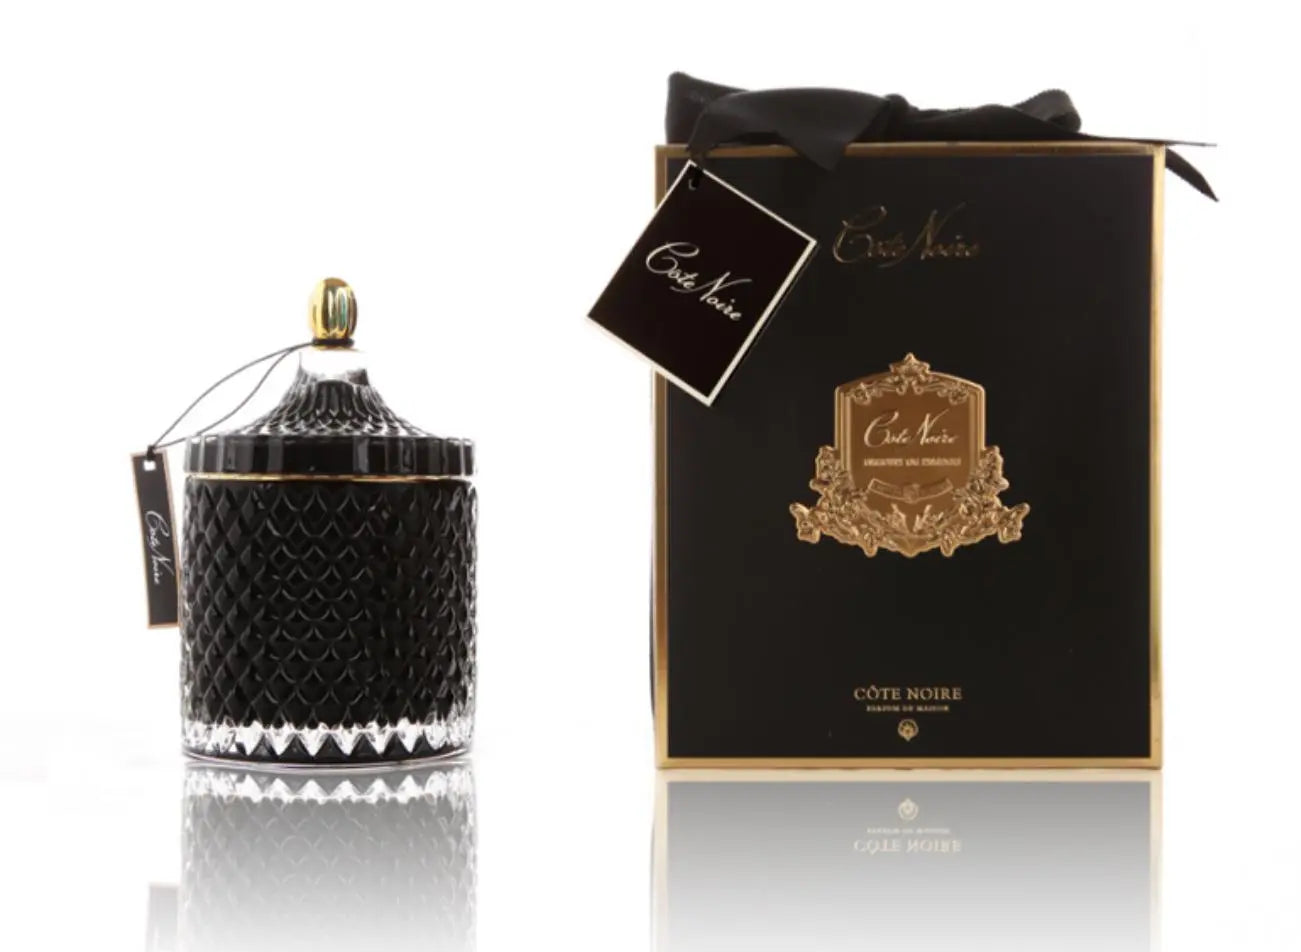 Grand Black Art Deco Candle French Morning Tea -  Cote noire -  Armani Gallery